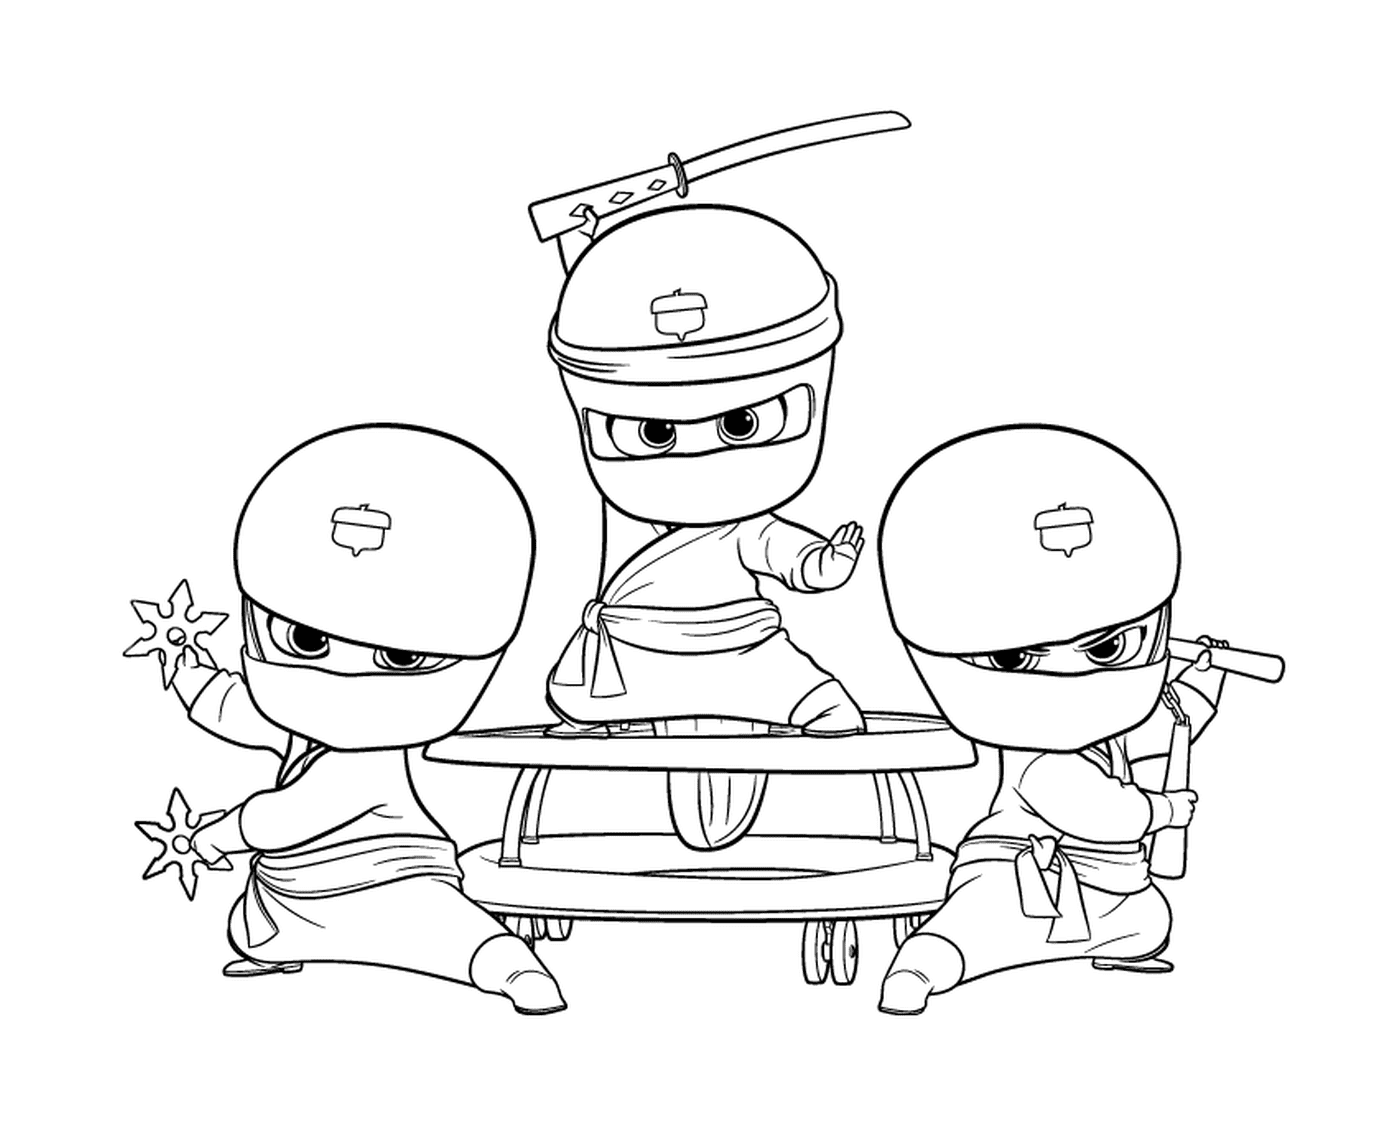   Trois ninjas 